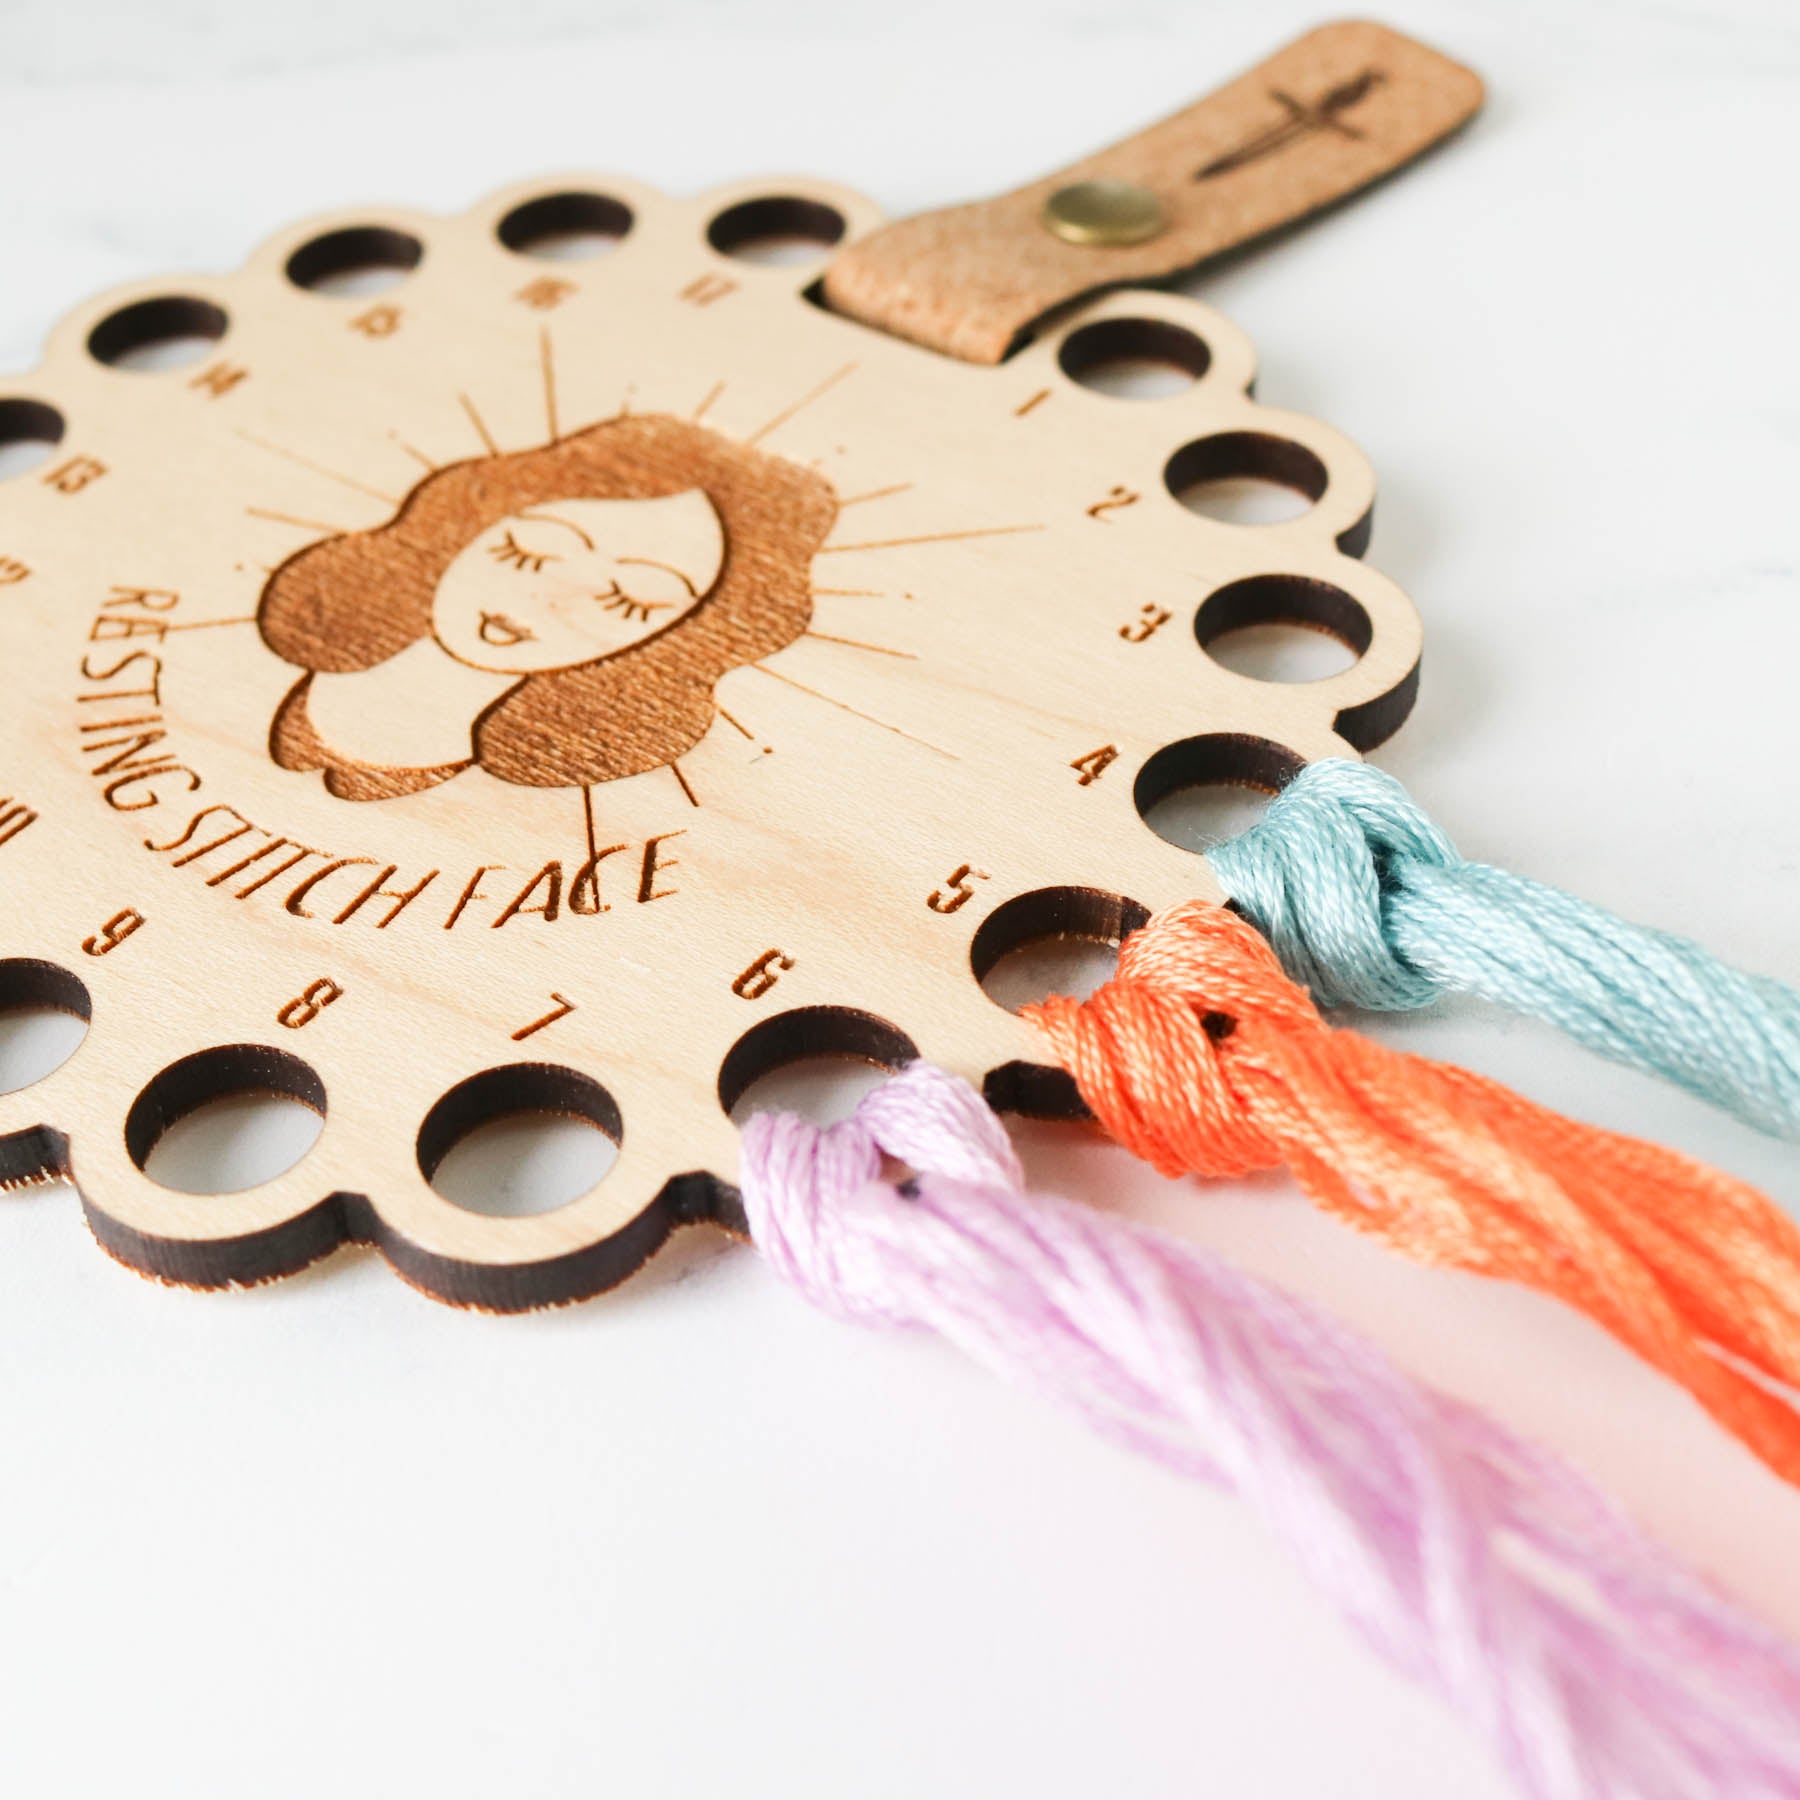 Embroidery / Cross Stitch Floss Organizer Wood 